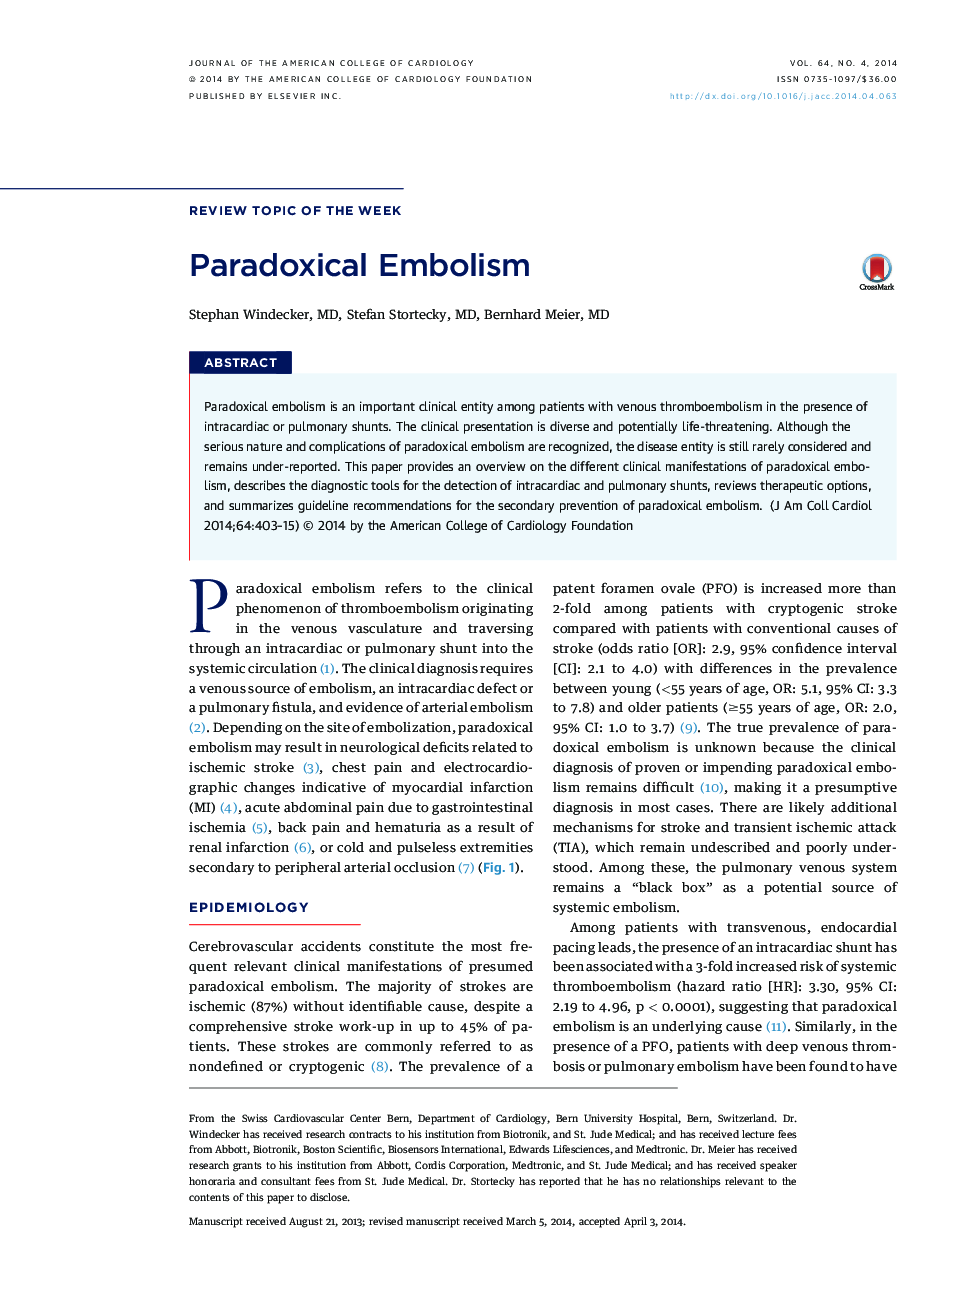 Paradoxical Embolism 